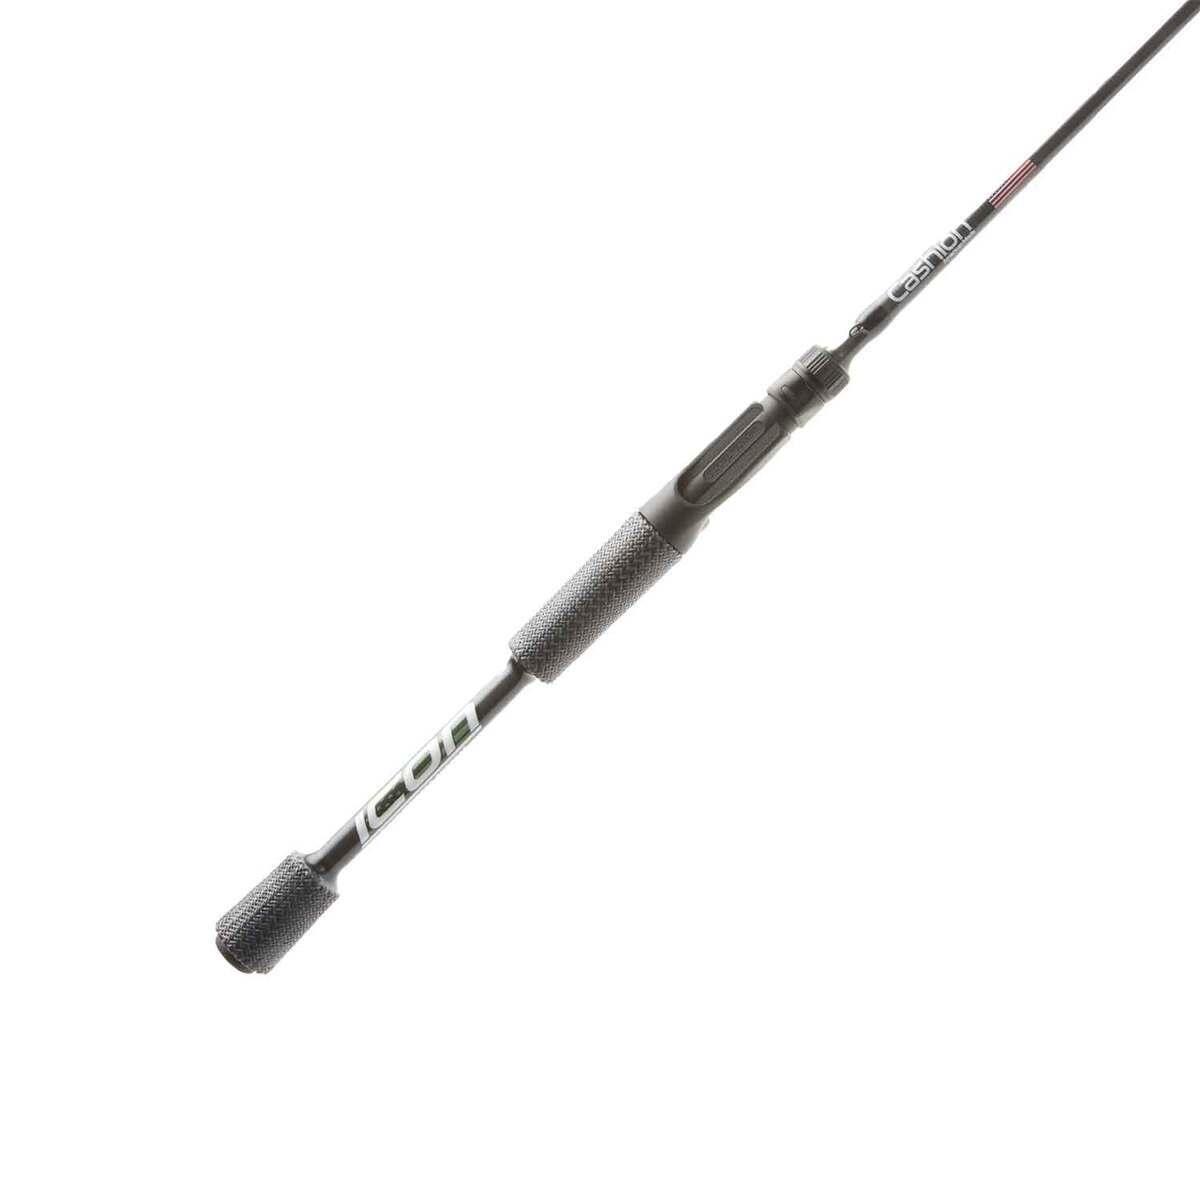 https://www.sportsmans.com/medias/cashion-fishing-rods-icon-bait-finesse-system-casting-rod-6ft-10in-medium-light-power-fast-action-1pc-1801904-1.jpg?context=bWFzdGVyfGltYWdlc3wyMzM2MXxpbWFnZS9qcGVnfGFEa3lMMmhtTkM4eE1URXpNek01TkRjNE1ERTVNQzh4T0RBeE9UQTBMVEZmWW1GelpTMWpiMjUyWlhKemFXOXVSbTl5YldGMFh6RXlNREF0WTI5dWRtVnljMmx2YmtadmNtMWhkQXxiNGIxMmUyOWMzY2NlNTlkOWJjODczMWUyYjAwNDBhOTZhNTI3ODk5ZGIzNDFlYWNkM2RkNmEyYTdlZjk0ZTE1